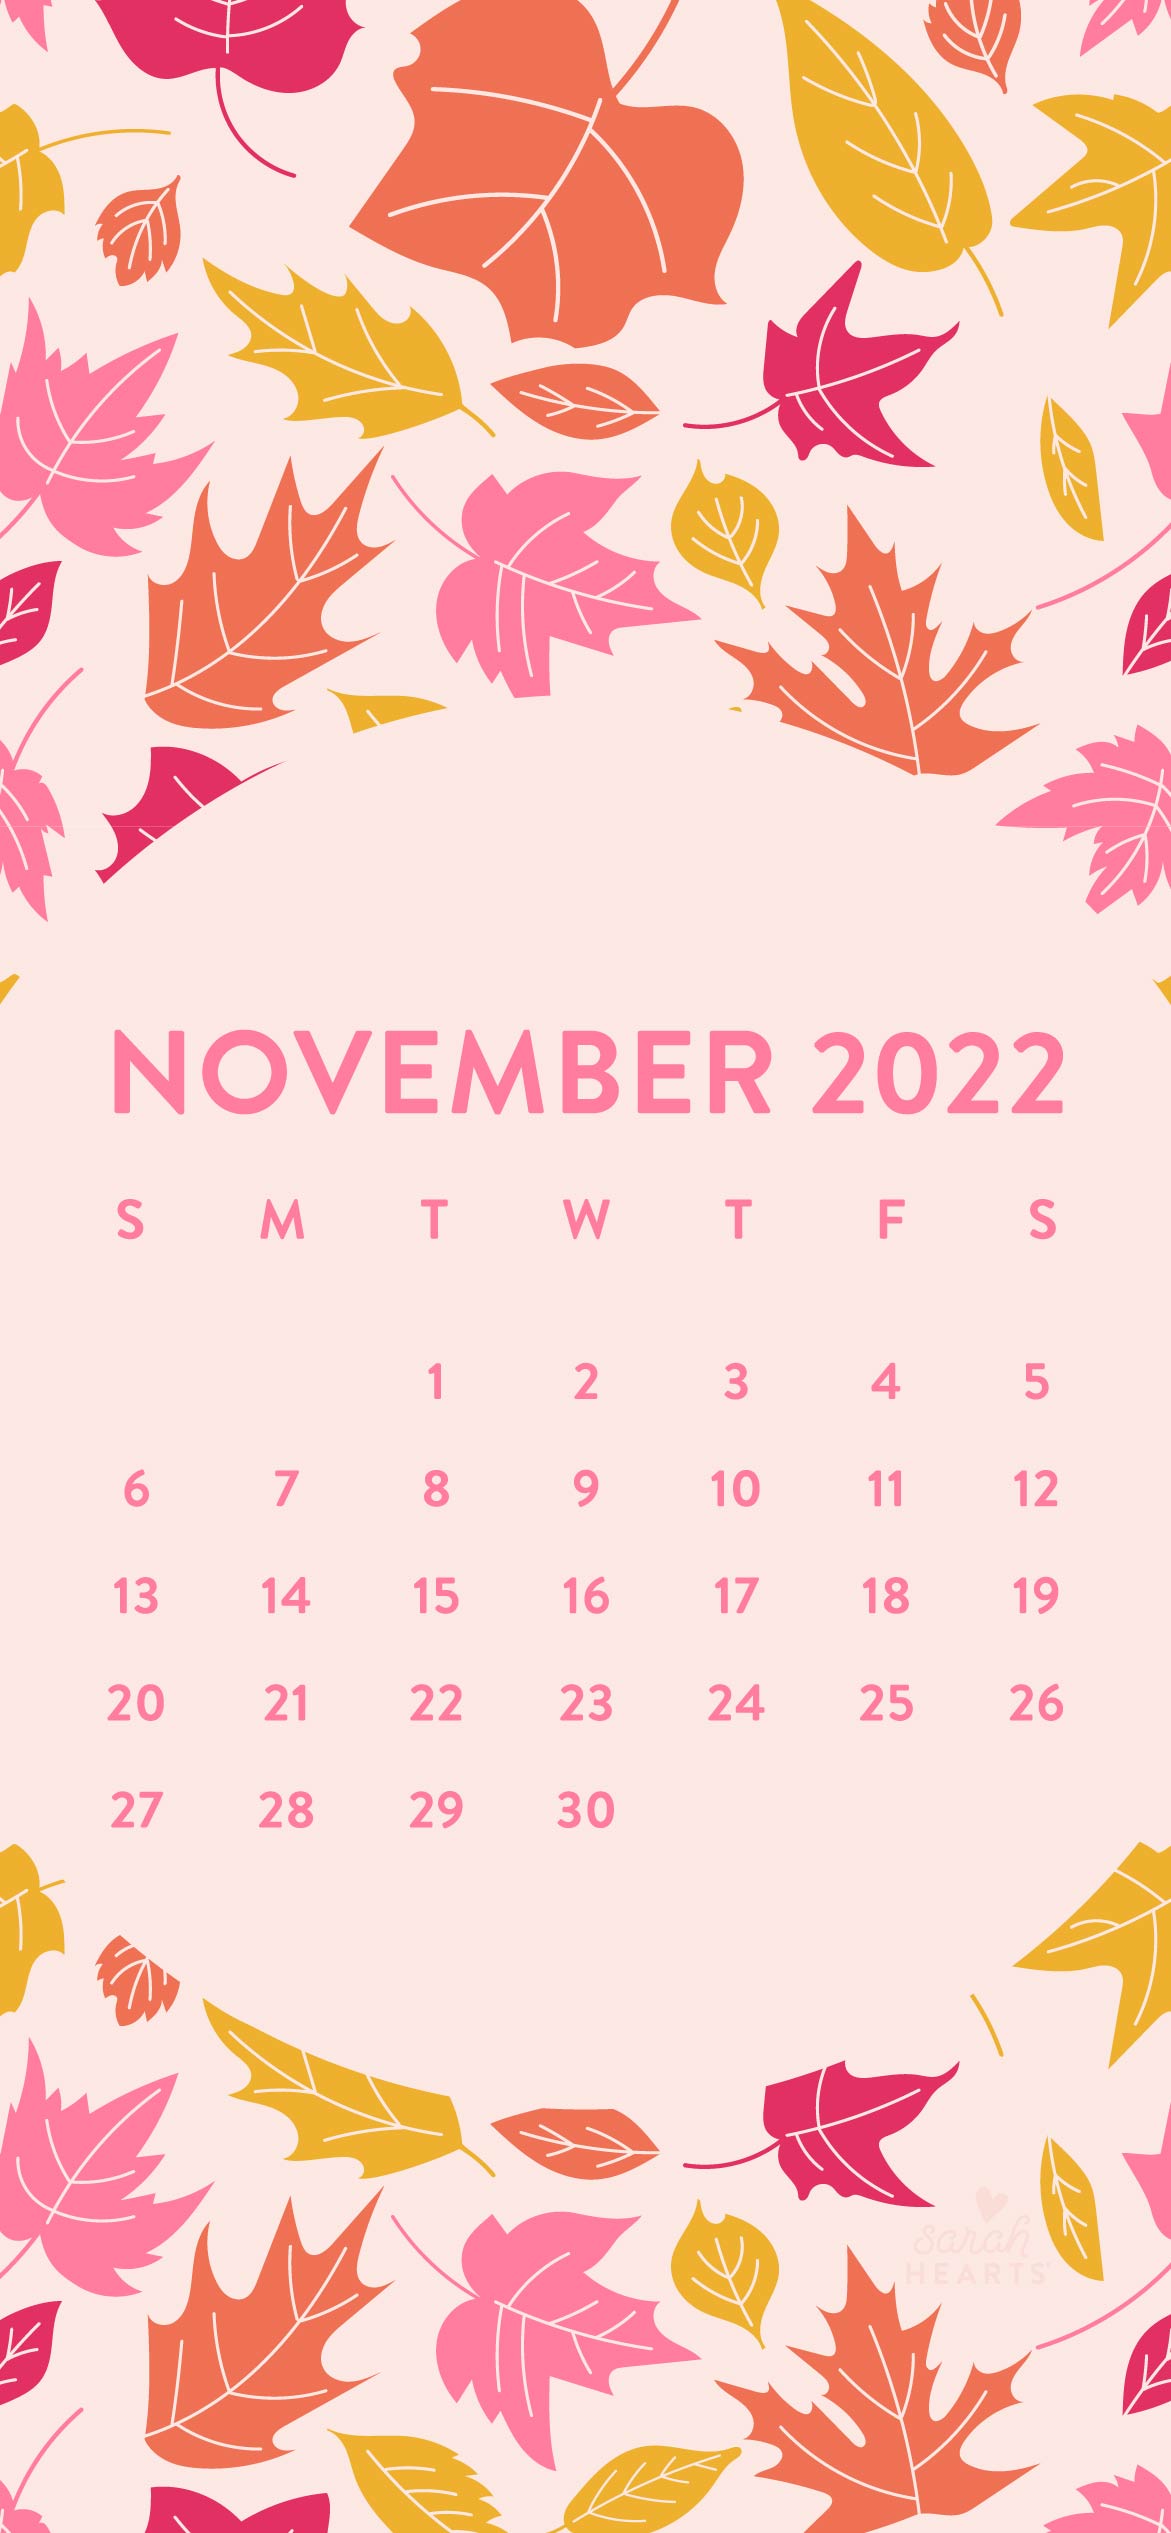 November 2022 Fall Leaves Calendar Wallpaper - Sarah Hearts